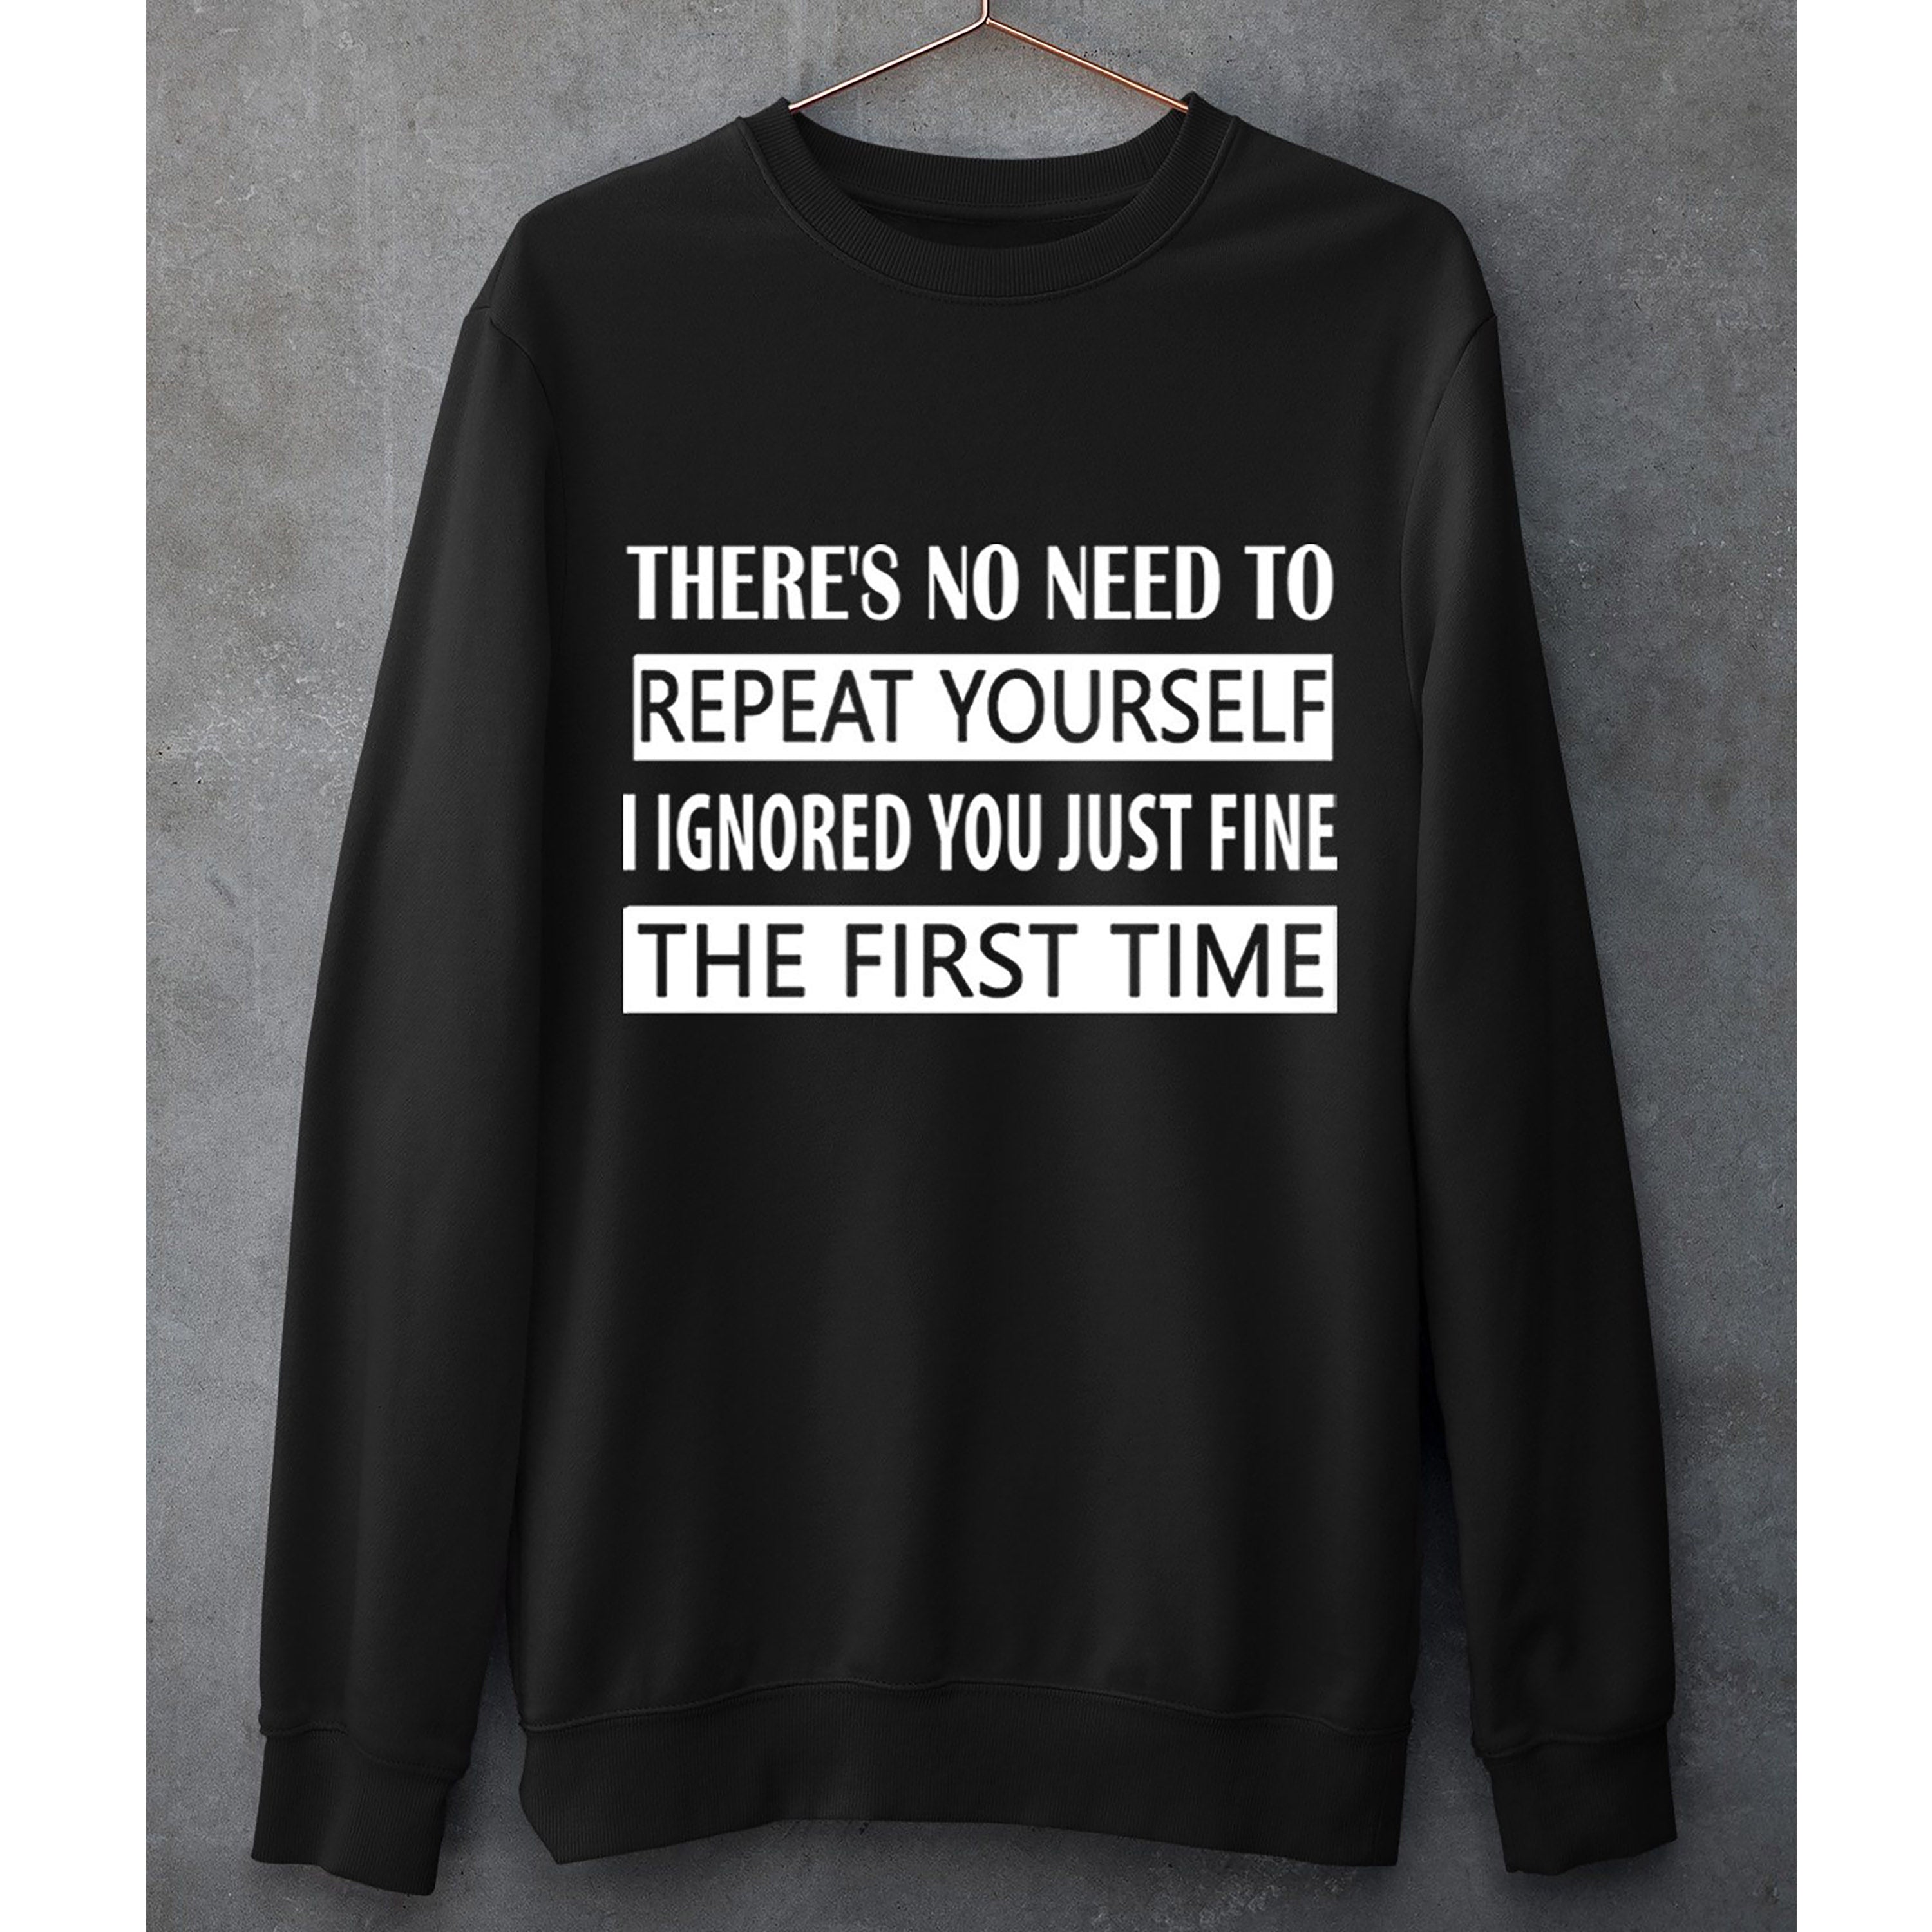 "NO NEED TO REPEAT YOURSELF" - Hoodie & Sweatshirt